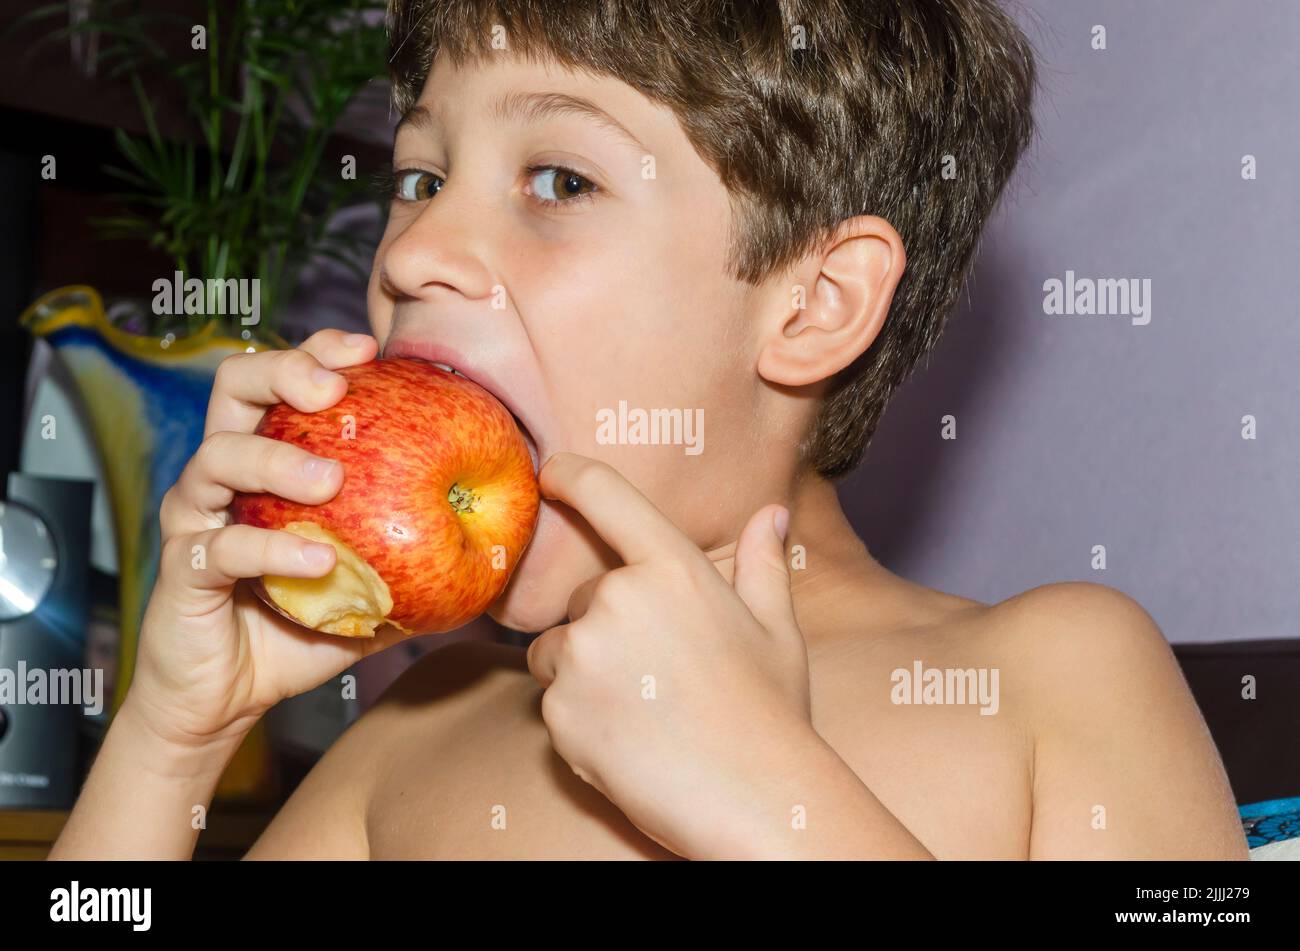 Child eating red apple at home. Salvador, Bahia, Brazil. Stock Photo